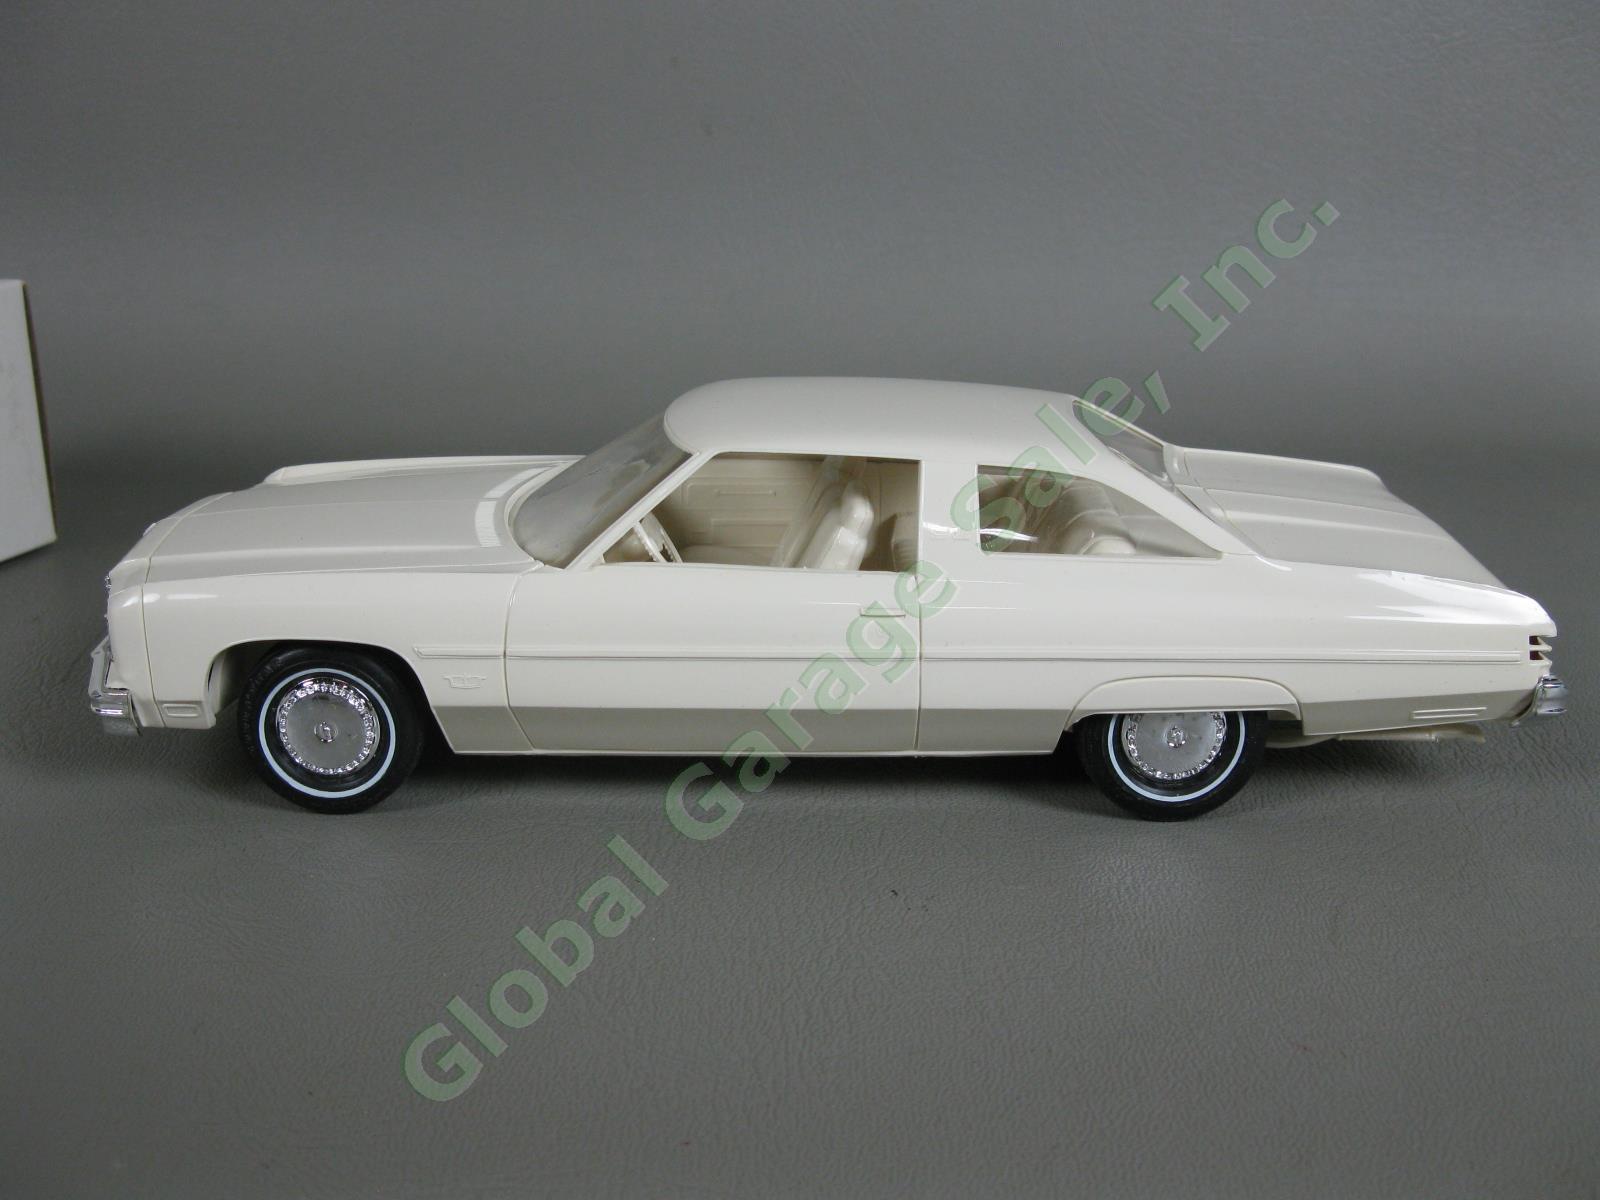 Original VTG 1976 Chevrolet Caprice Classic White Plastic Dealer Promo Model Car 1